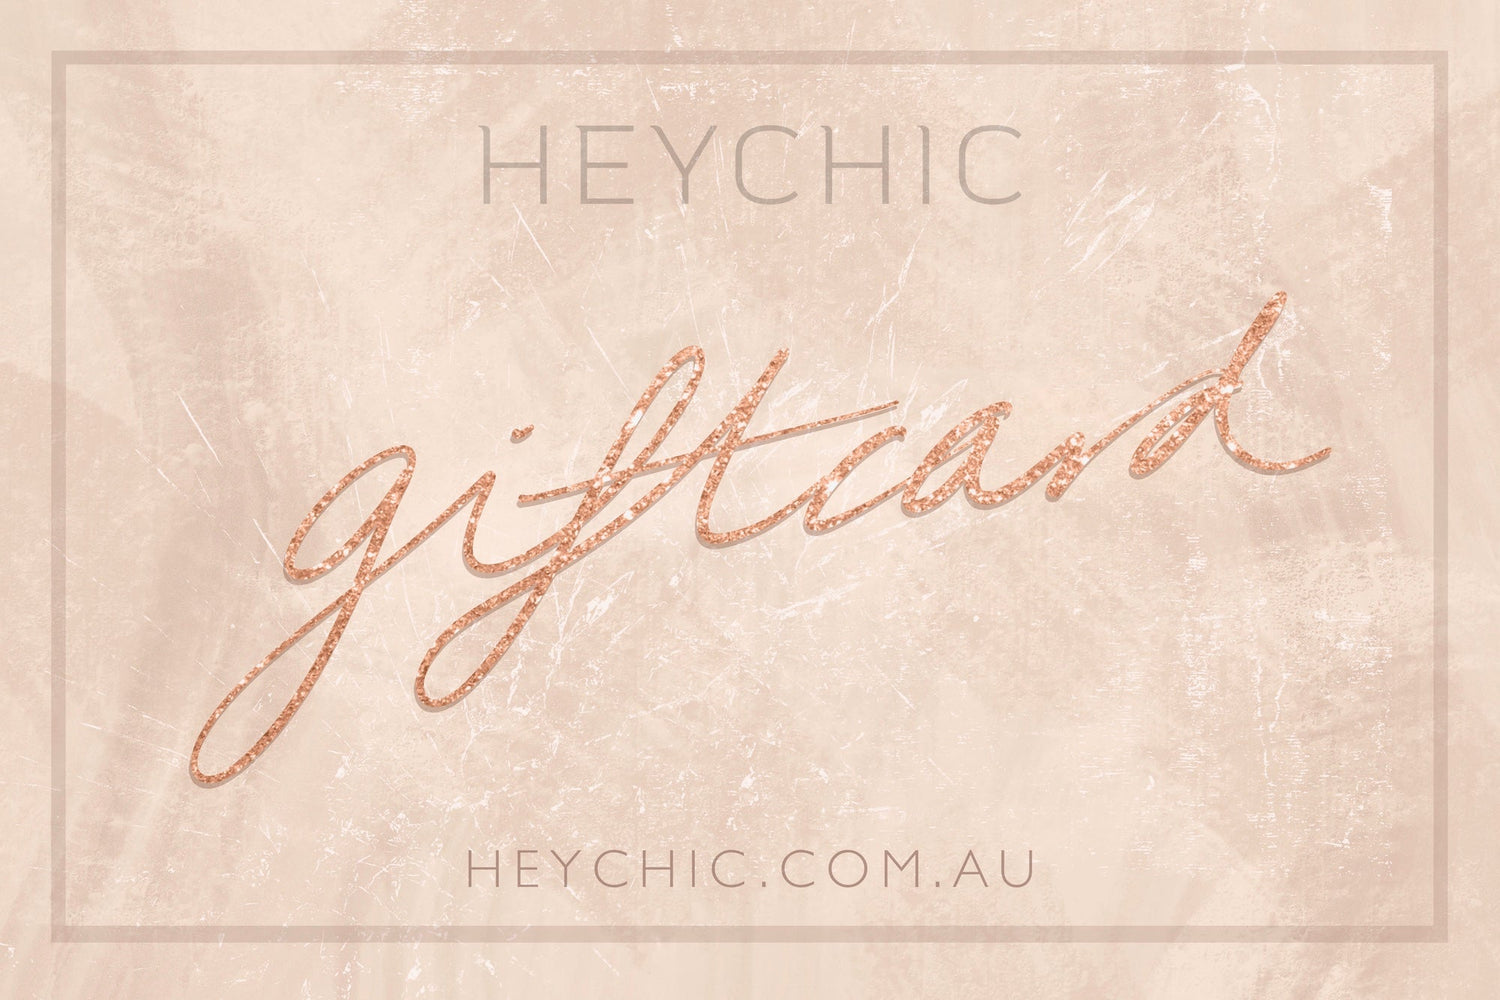 Heychic giftcard